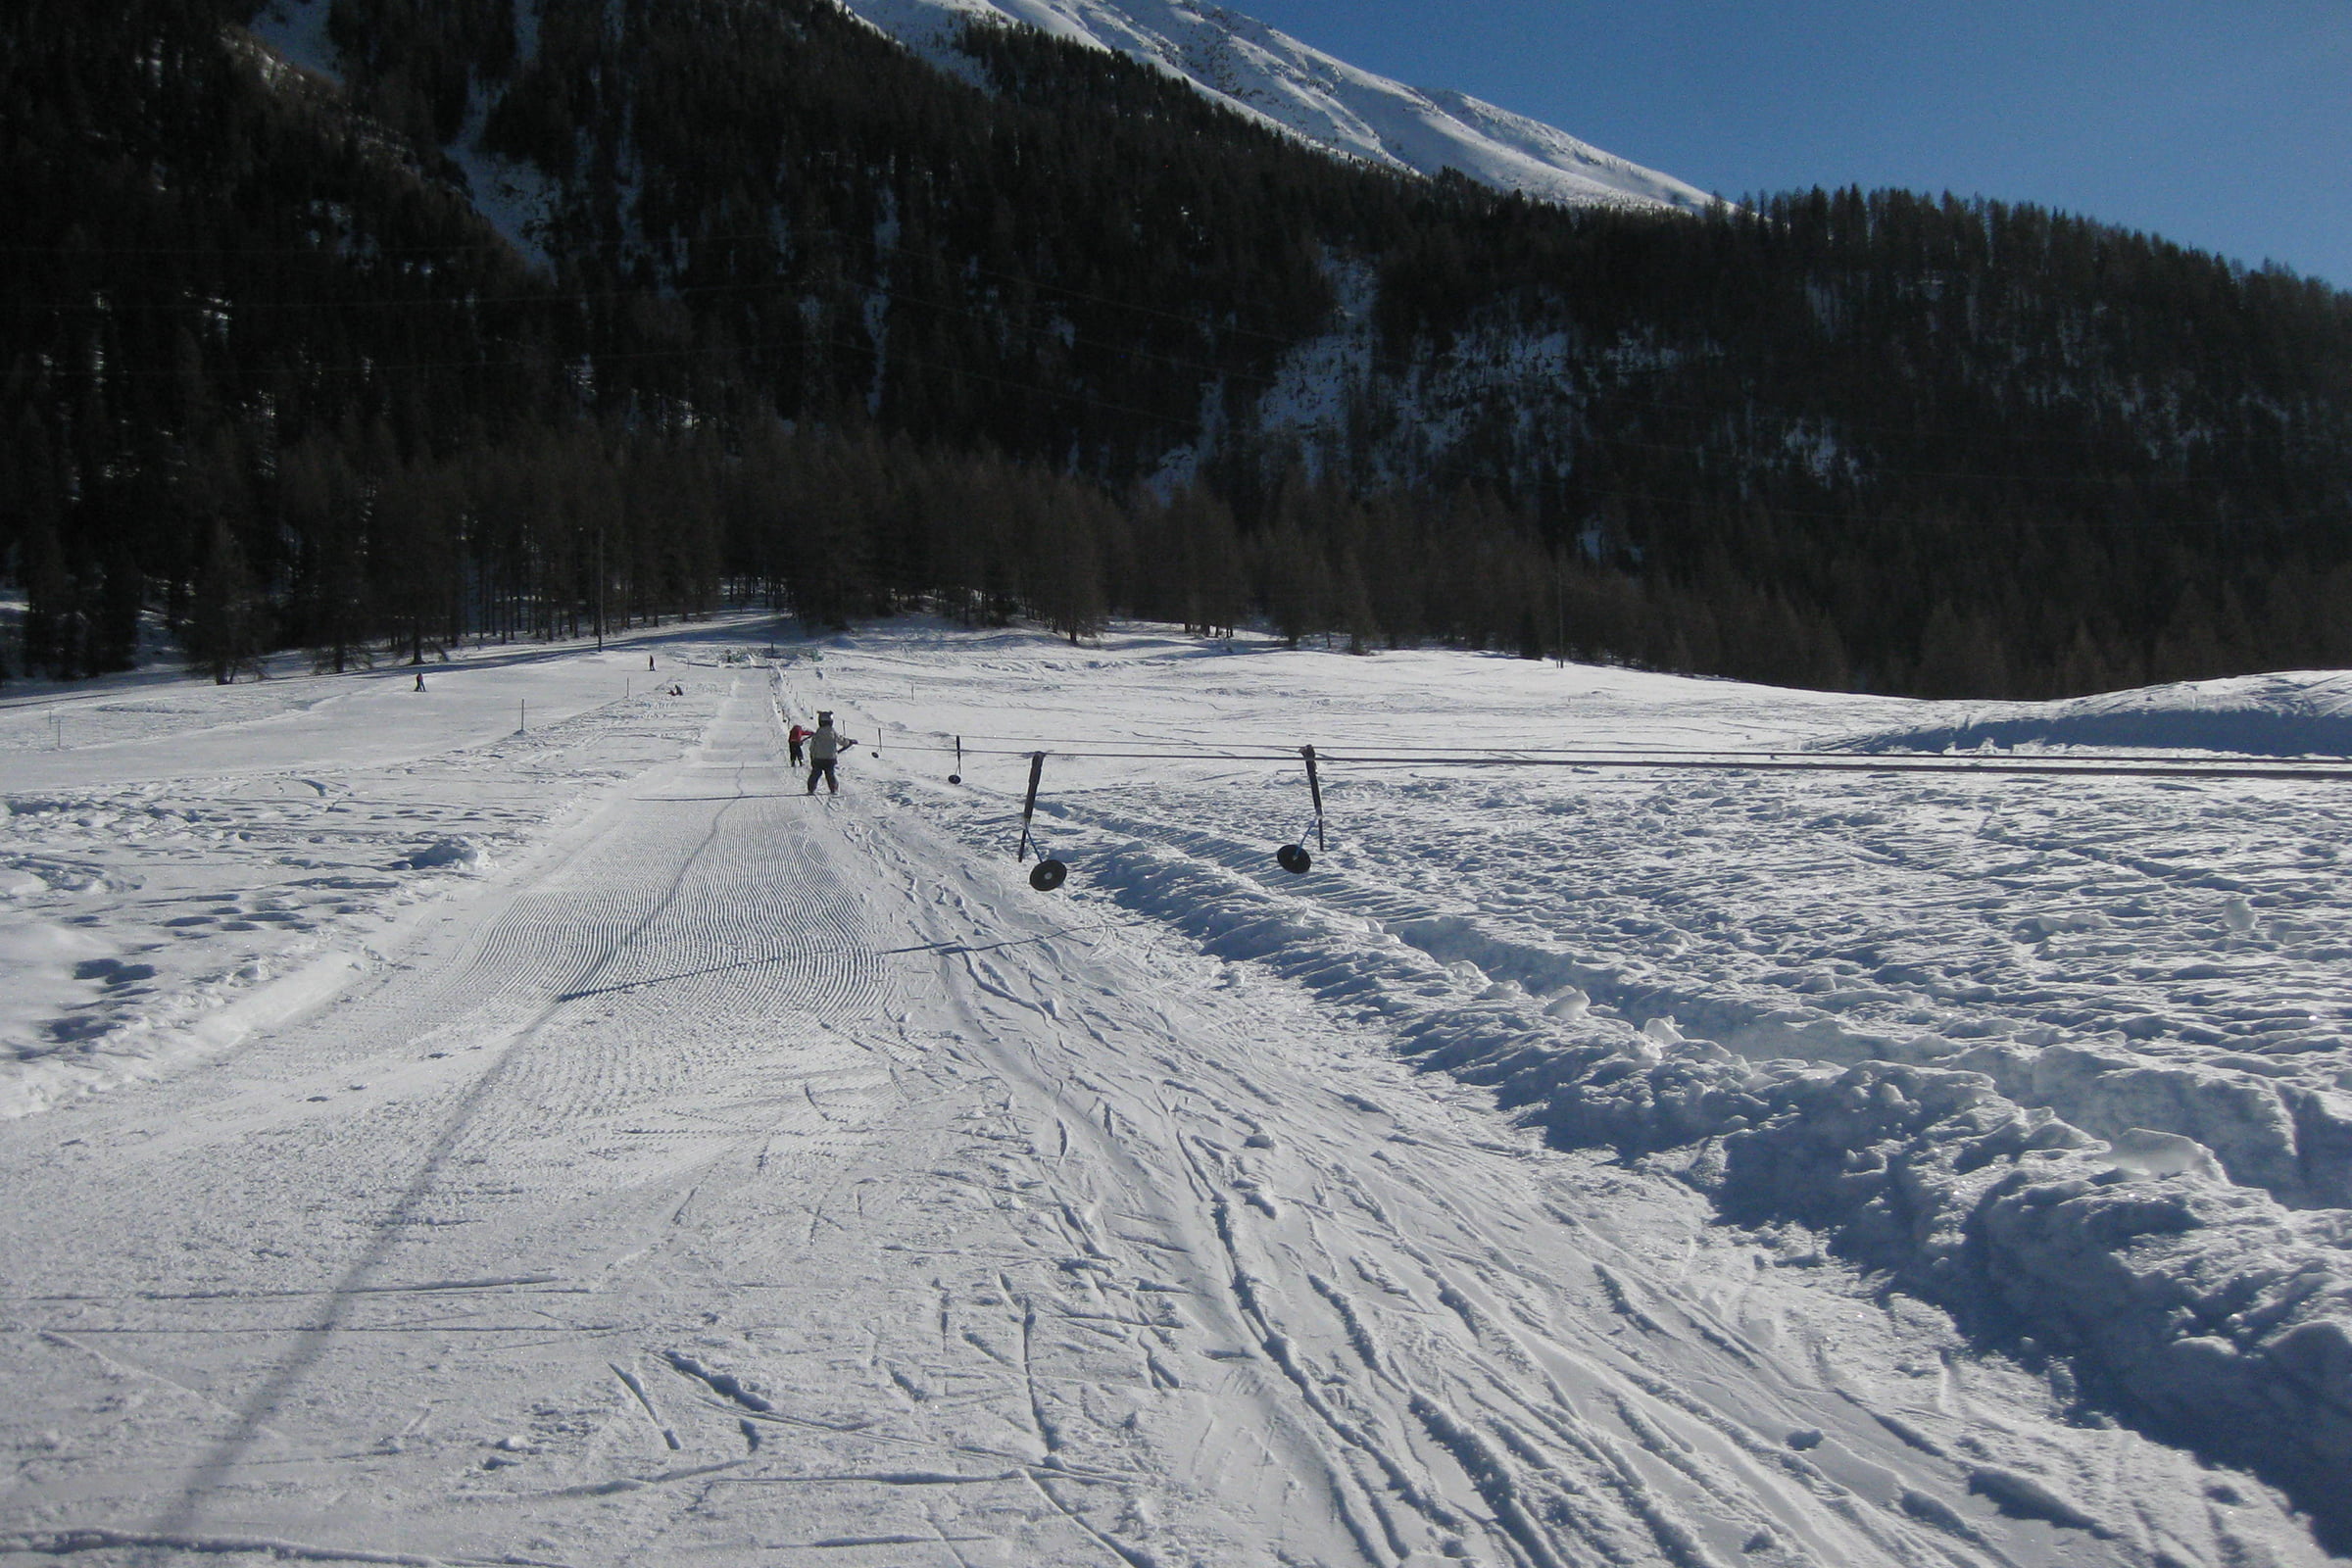 Bügls children's ski lift, S-chanf